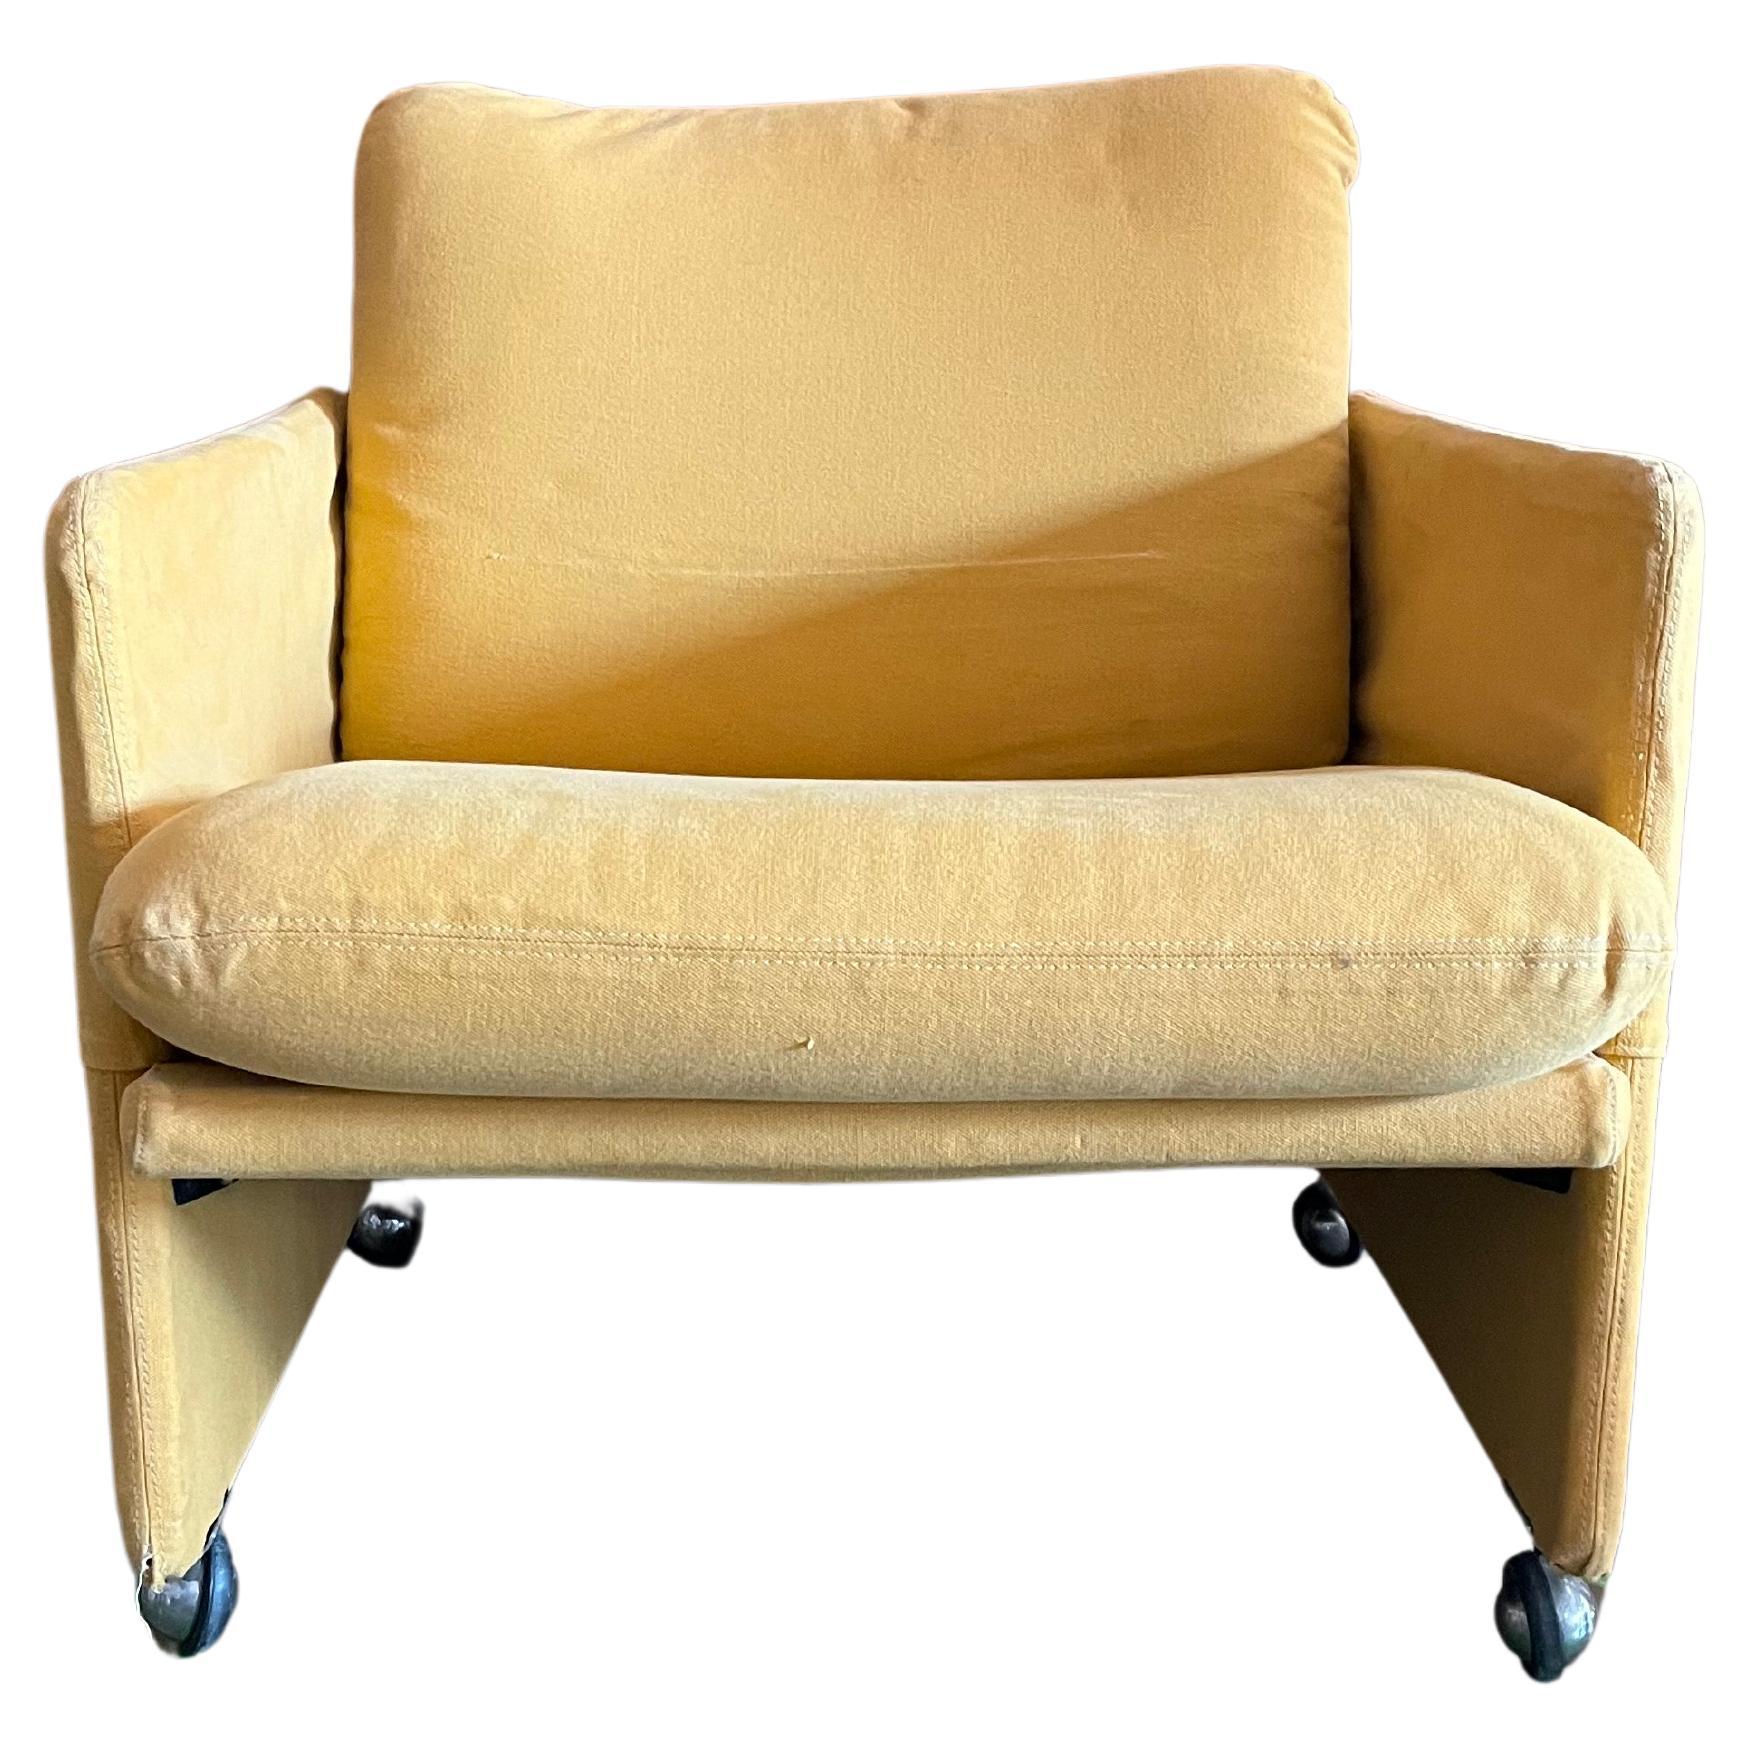 Arflex armchair mod. Springtime designed by Marco Zanuso For Sale